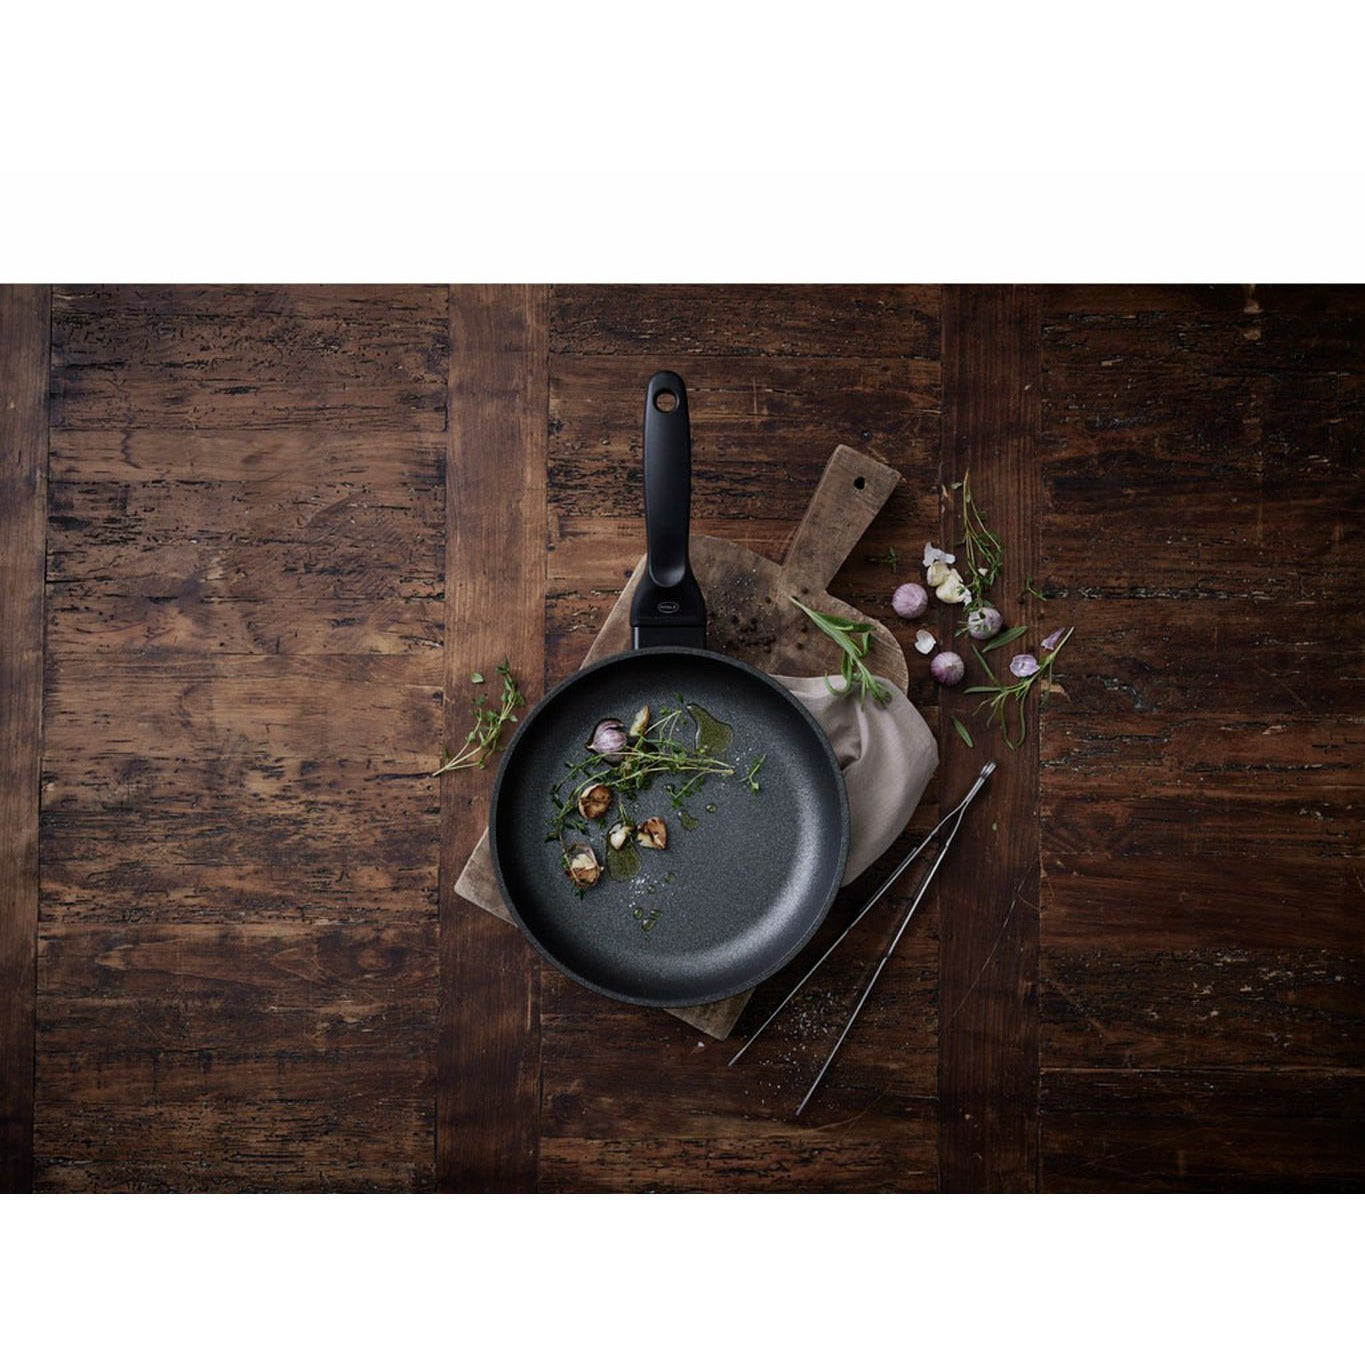 Rösle Cadini Pro Resist Fring Pan, 28 cm